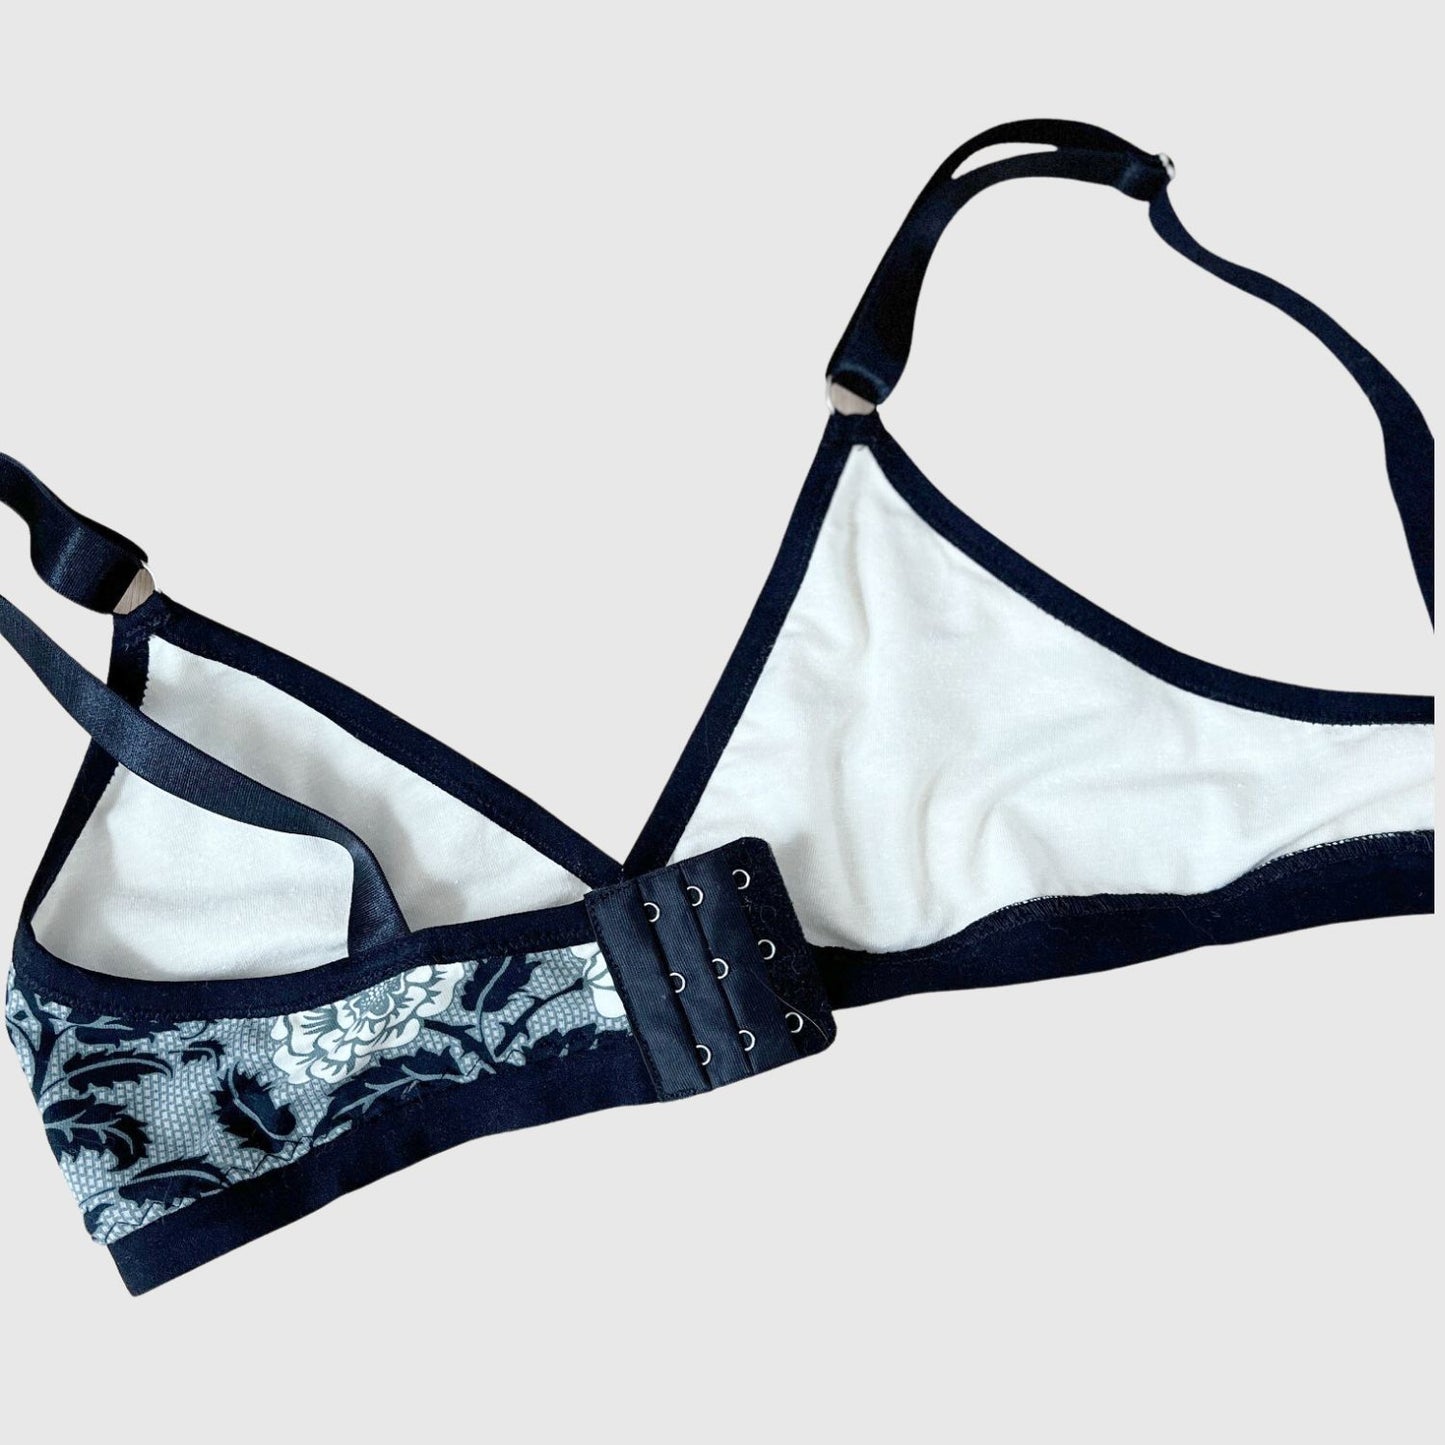 Buy Hiakan Cotton Padded Stylish Net Design Bra Panty Set,SIZE-30 at